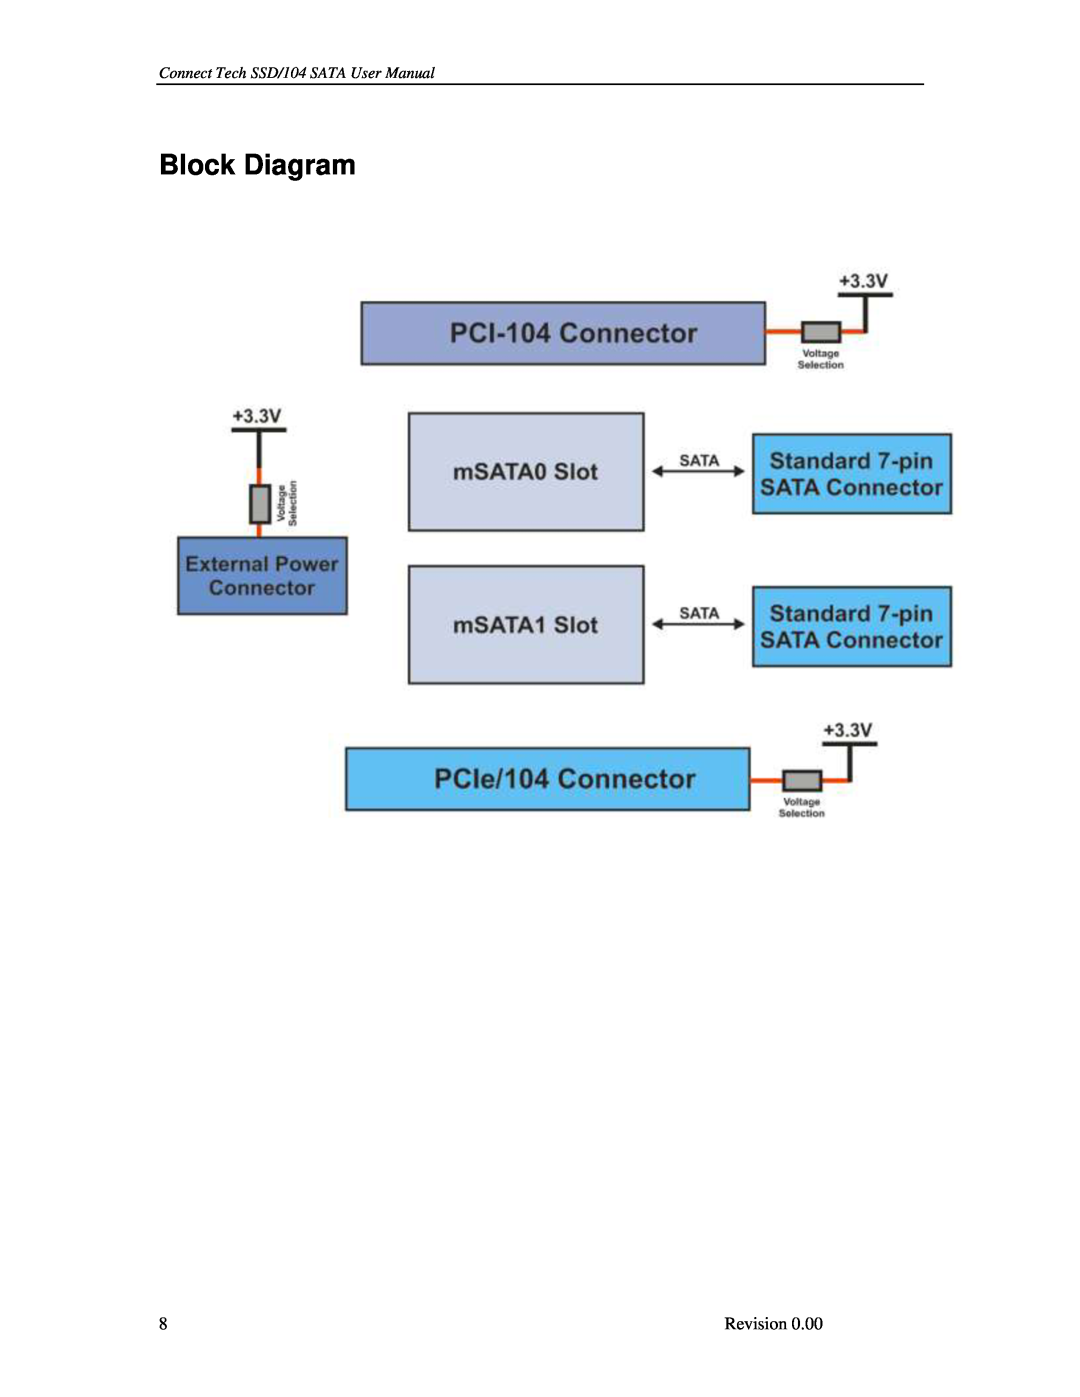 Connect Tech SSD/104 user manual Block Diagram, Revision 